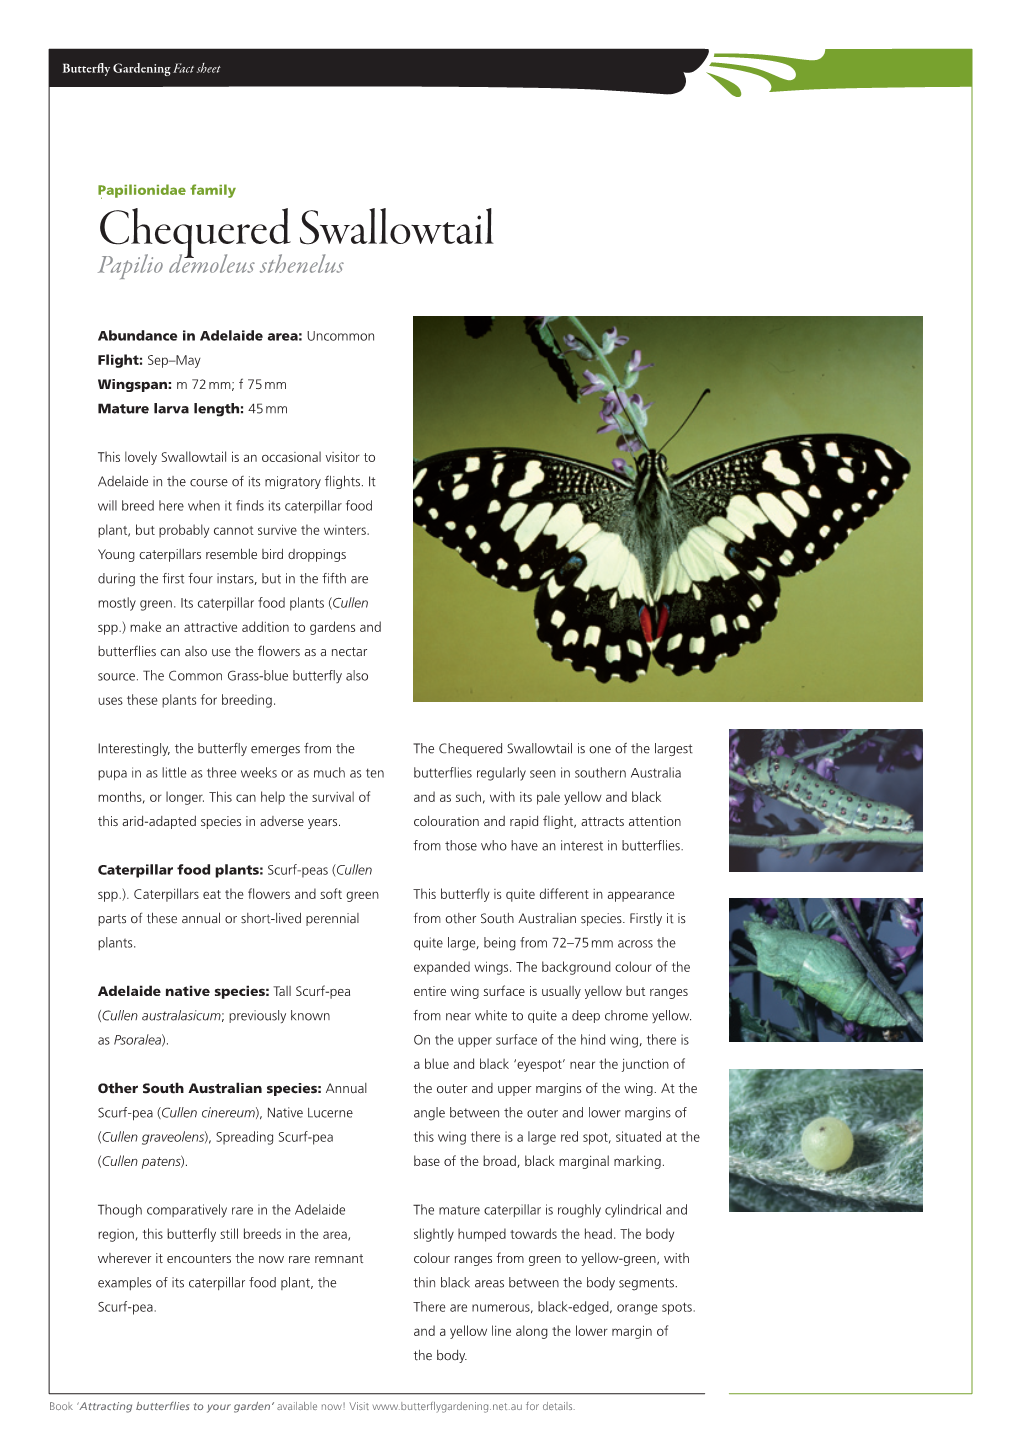 Chequered Swallowtail Papilio Demoleus Sthenelus